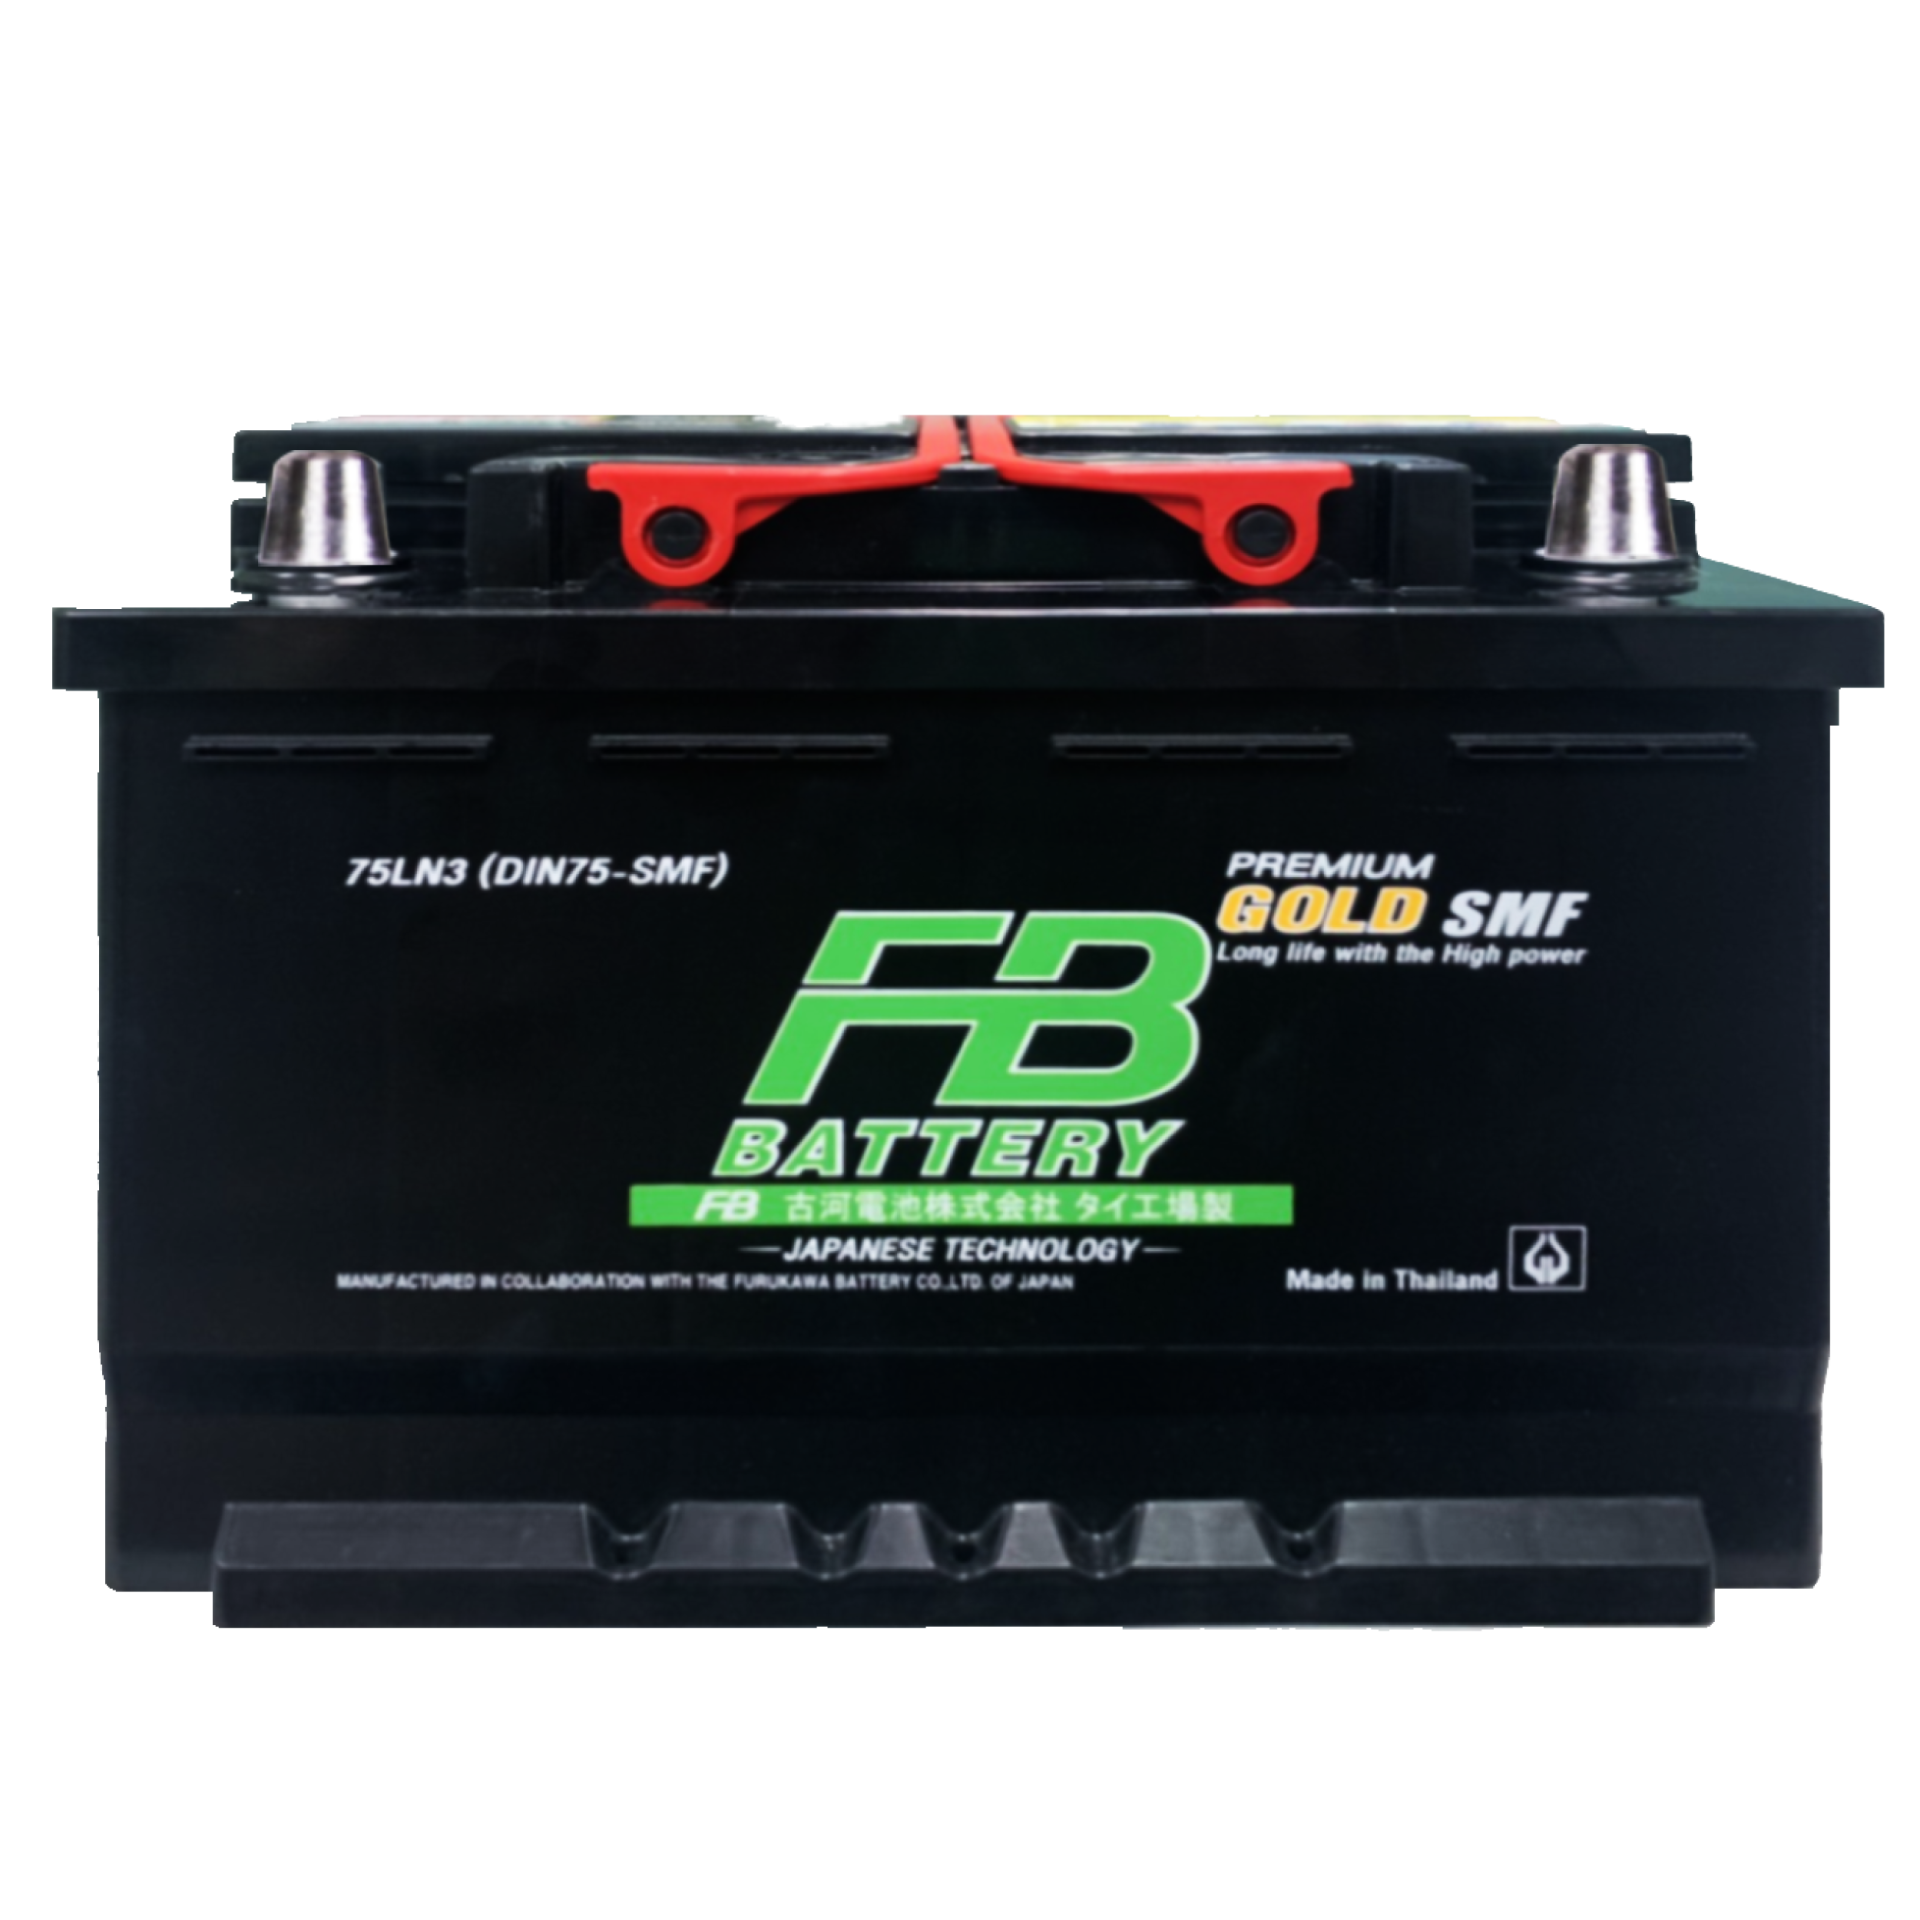 Battery FB Premium Gold 72LBN3L SMF (Sealed Maintenance Free Type) 12V 72Ah  - rungseng